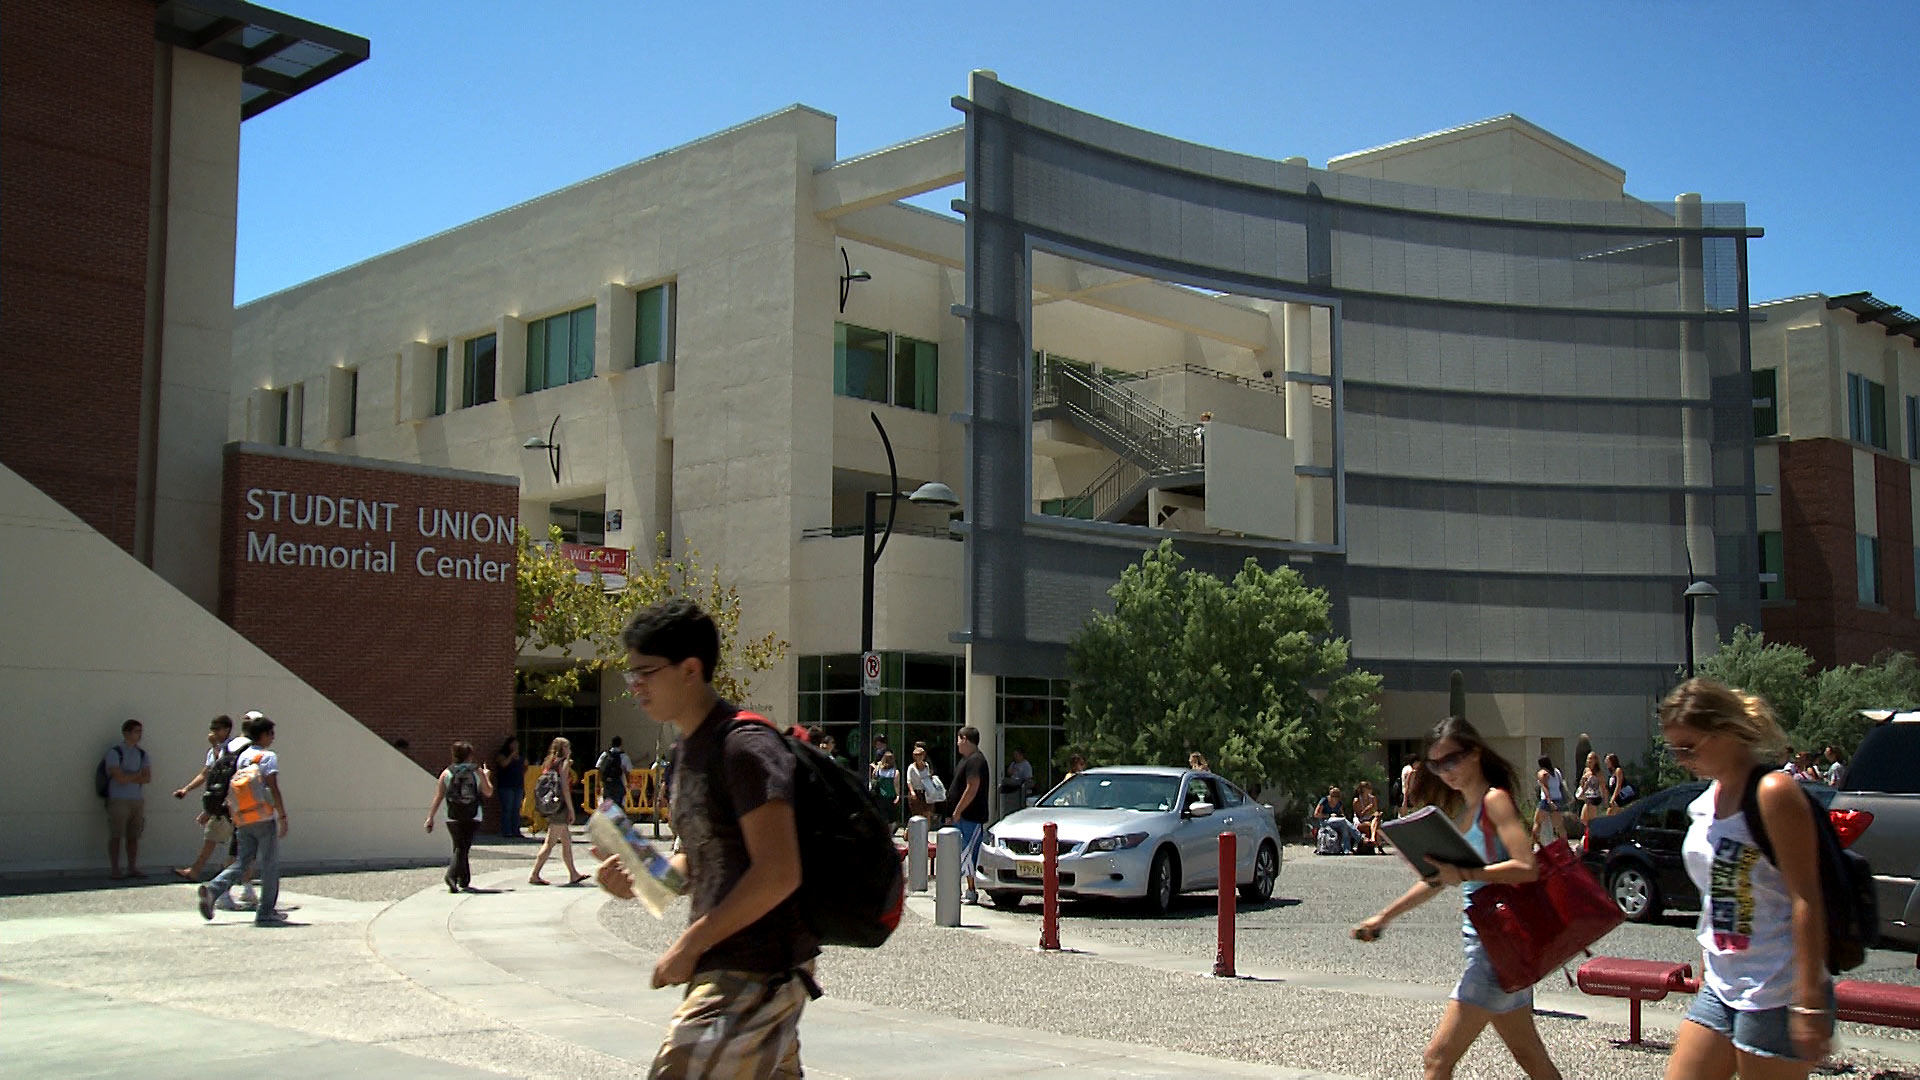 The University of Arizona Student Union Memorial Center.